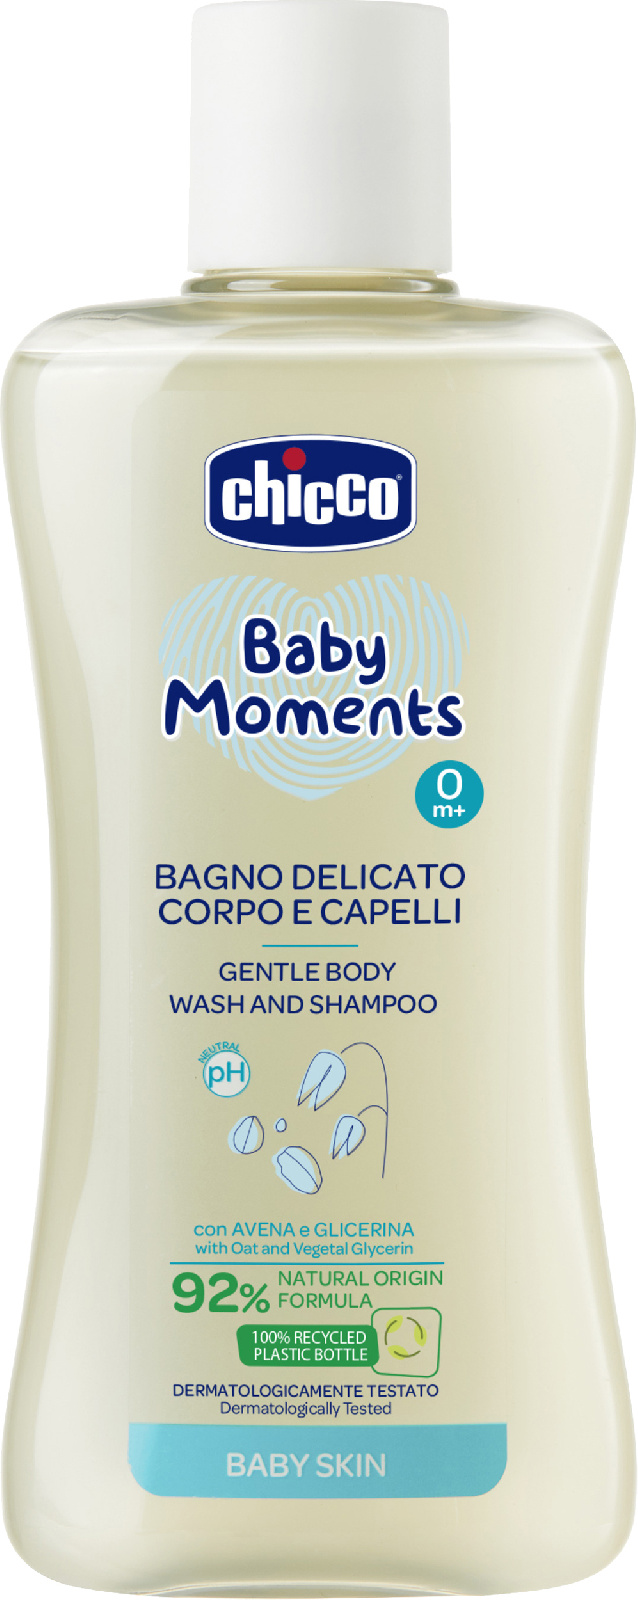 Нежная пена для тела и волос Chicco Baby Moments 0м+, 200 мл